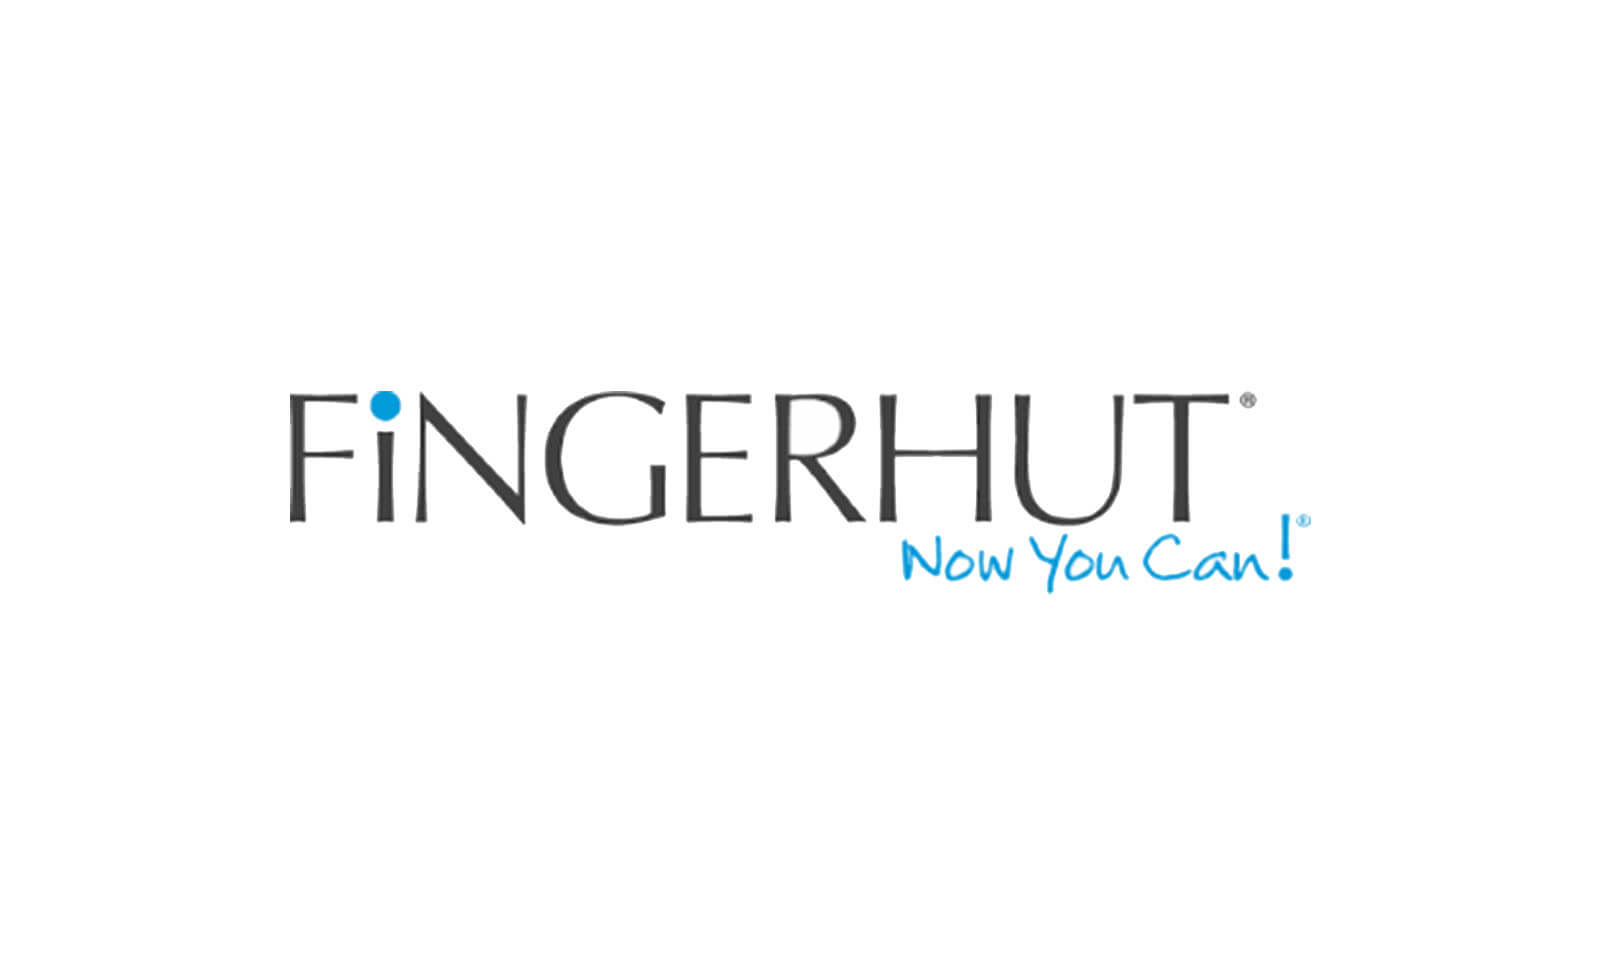 FingerHut